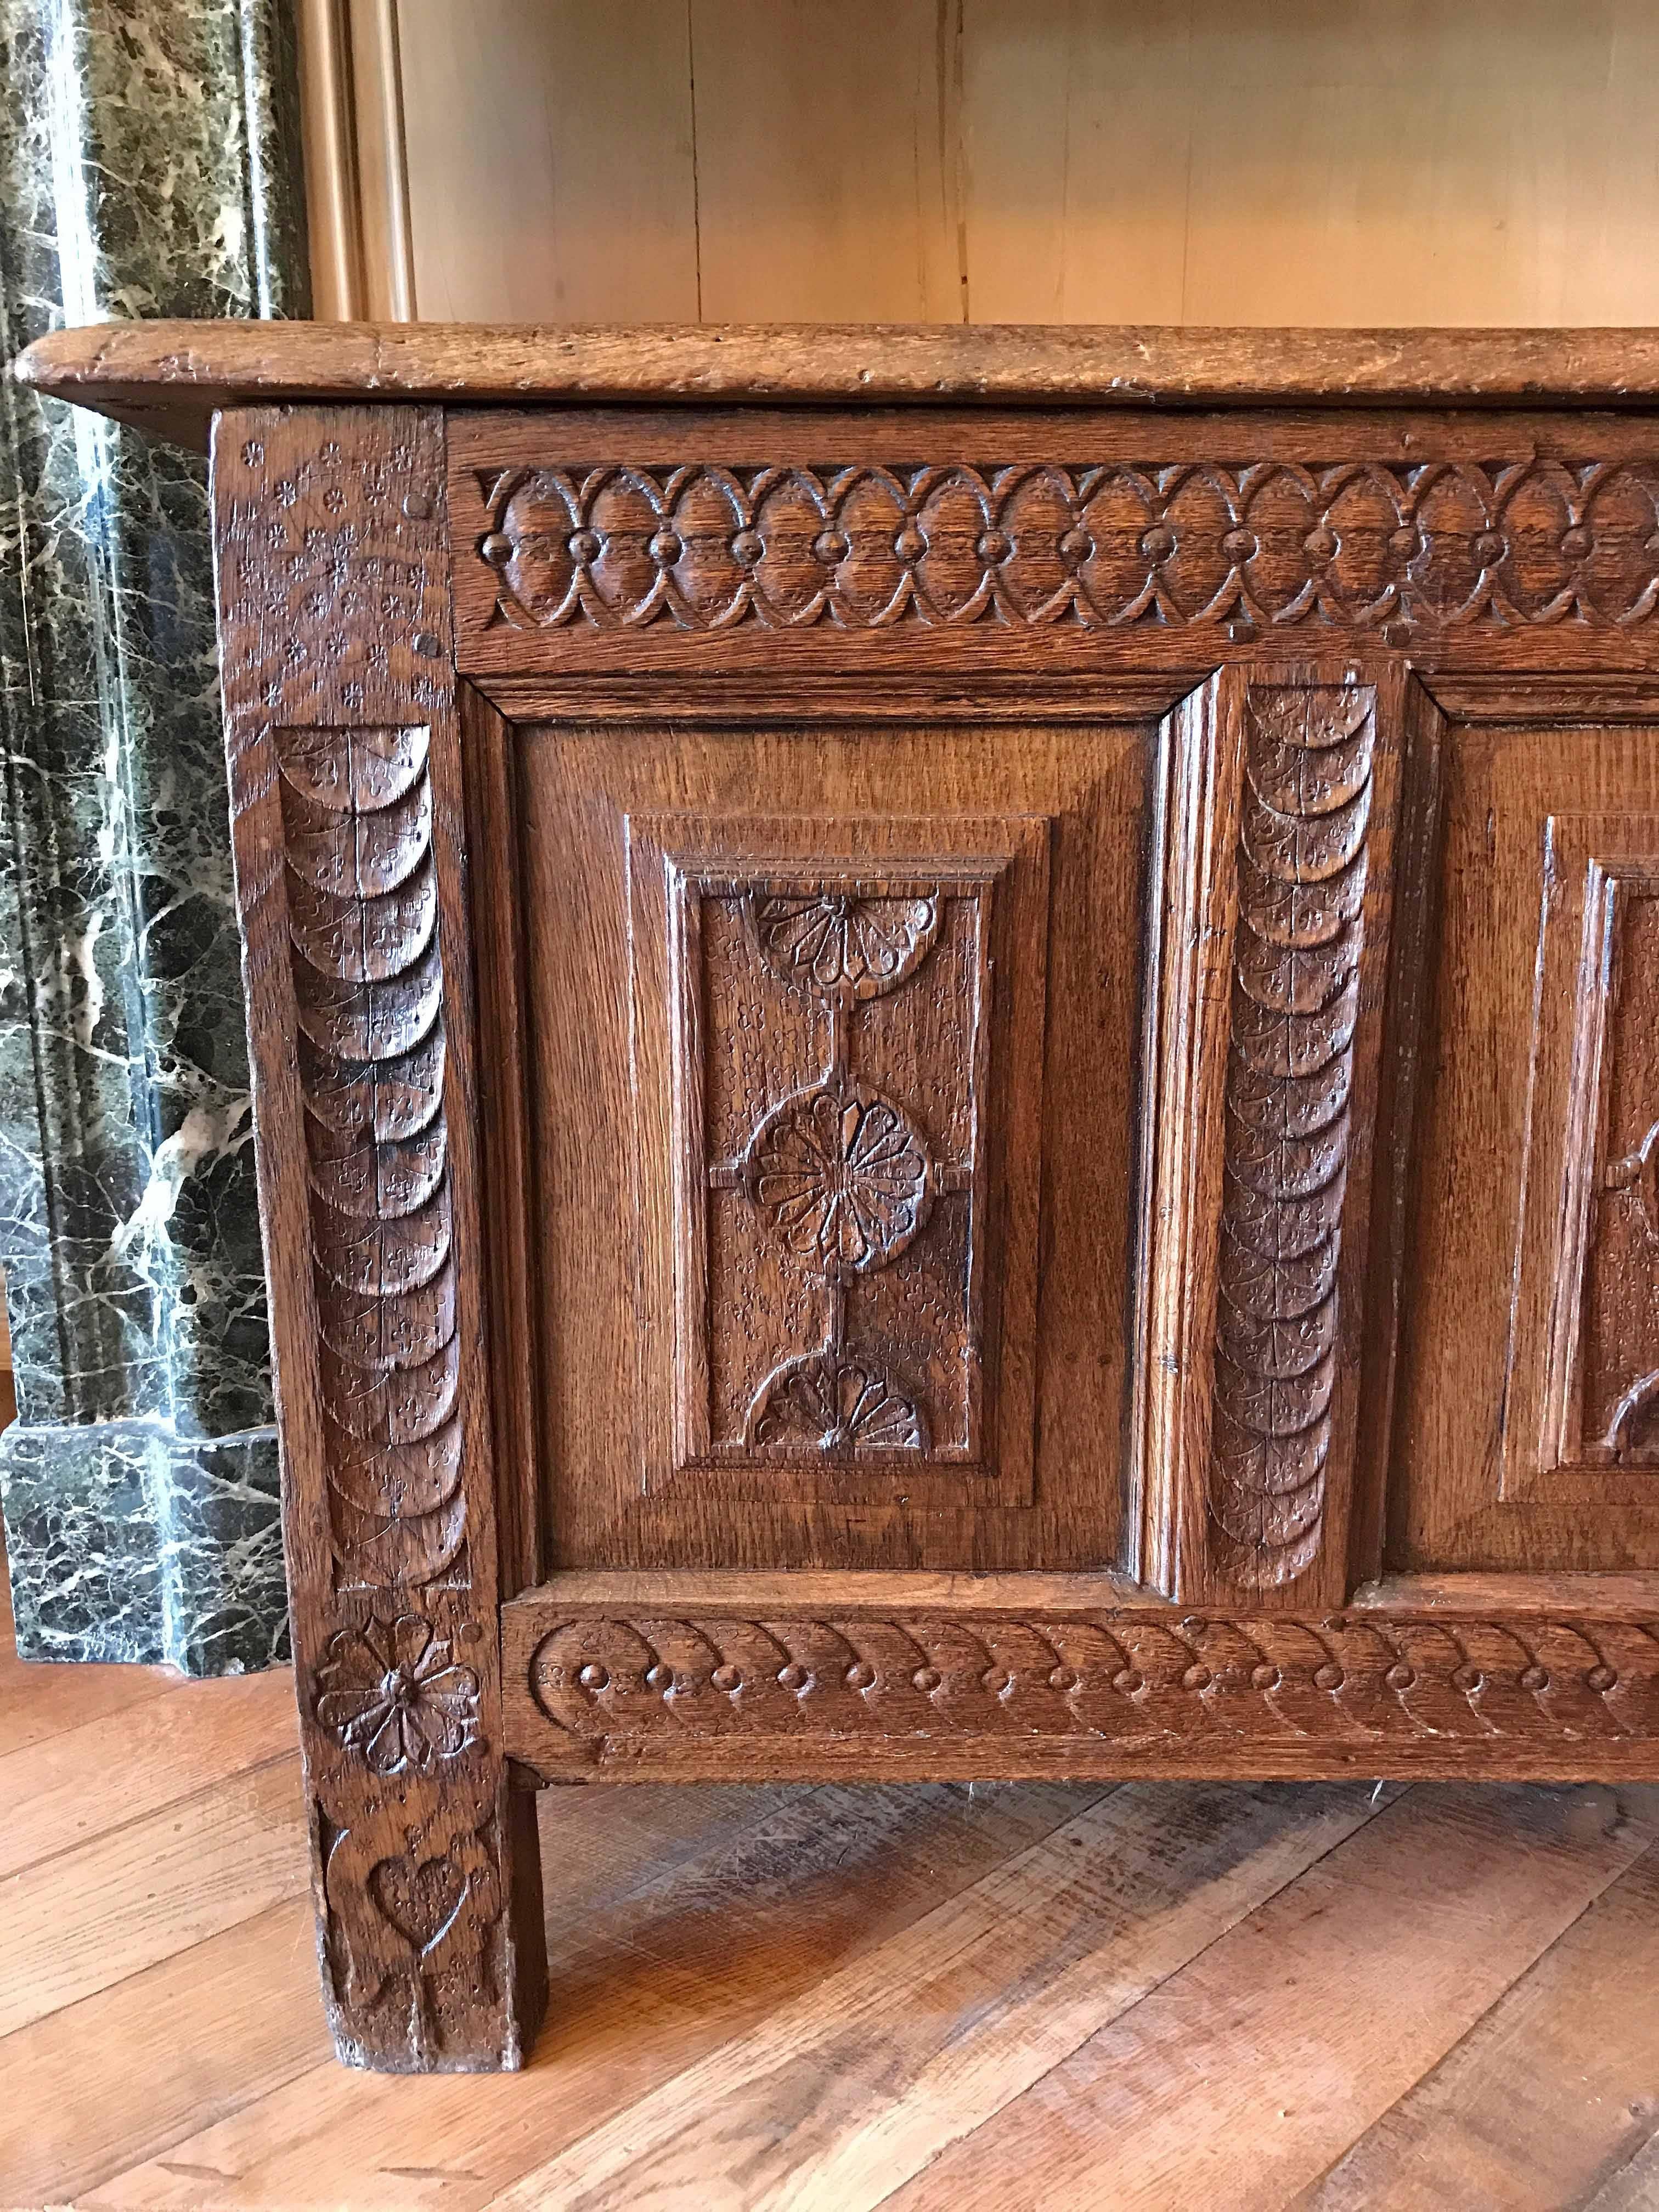 Antique Spanish chest with wonderful carving details.

Origin: Spain 

circa 1750

Measurements: 44